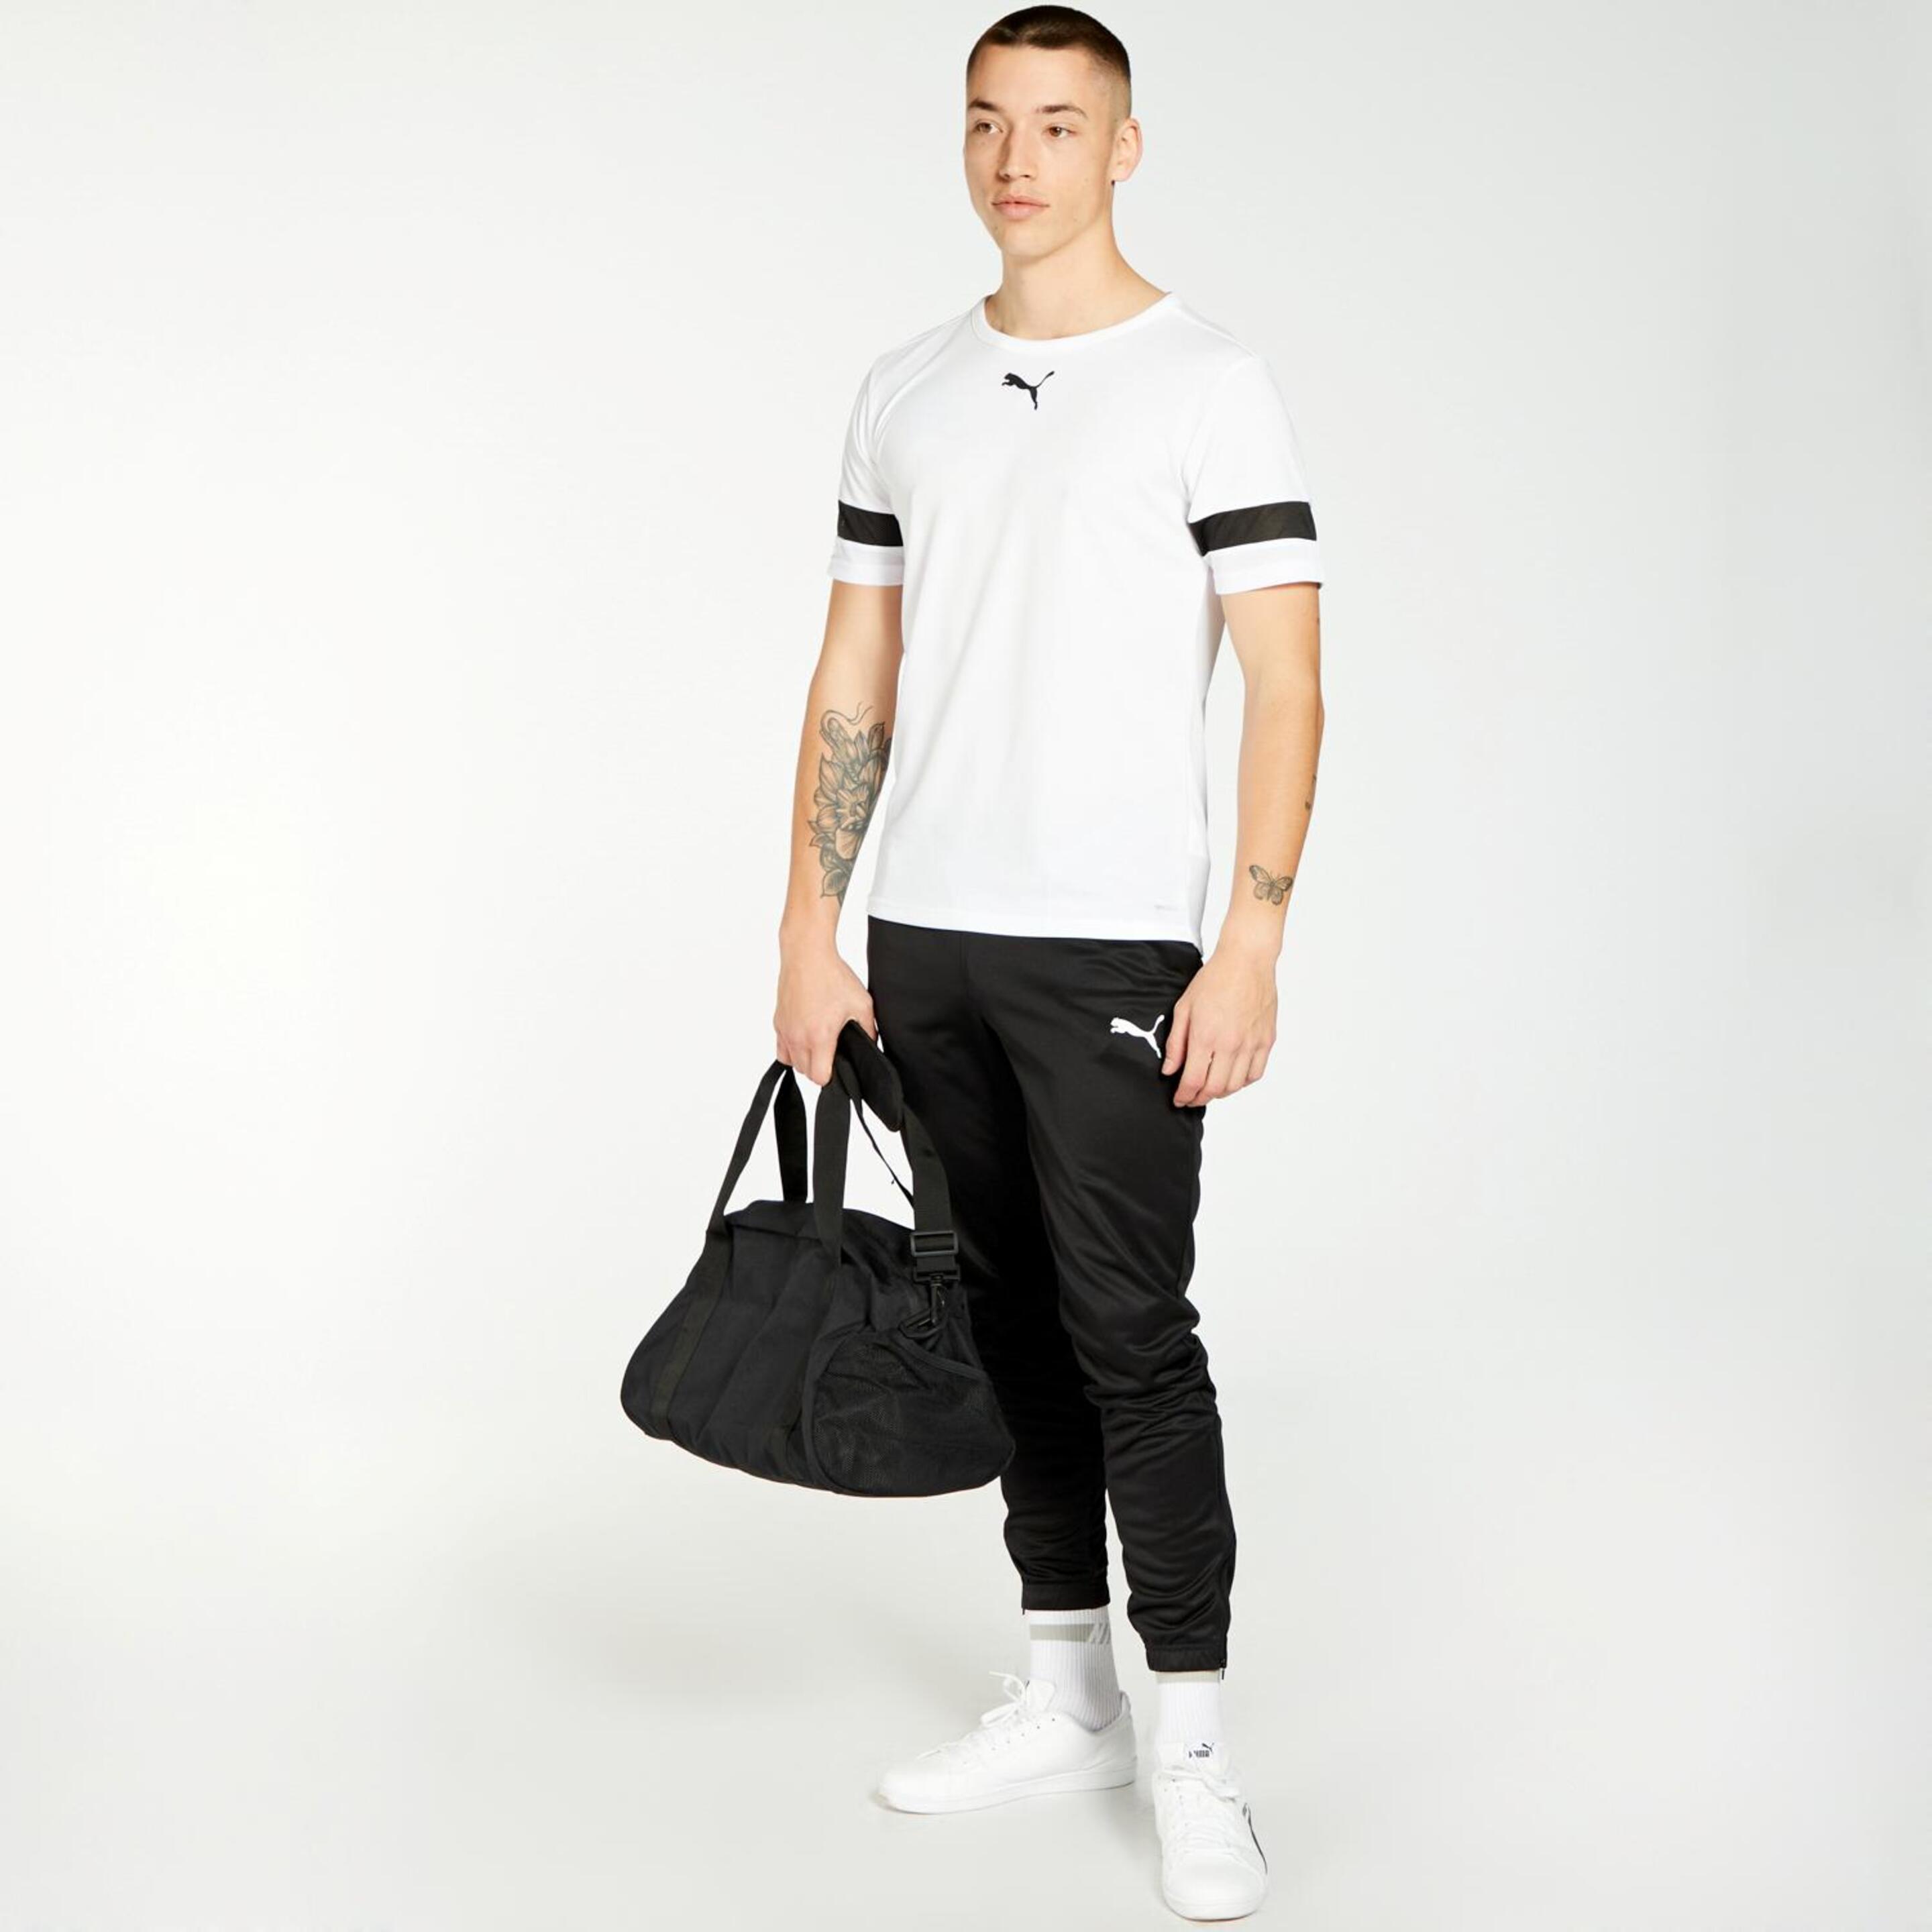 Puma Team Rise - blanco - Camiseta Fútbol Hombre